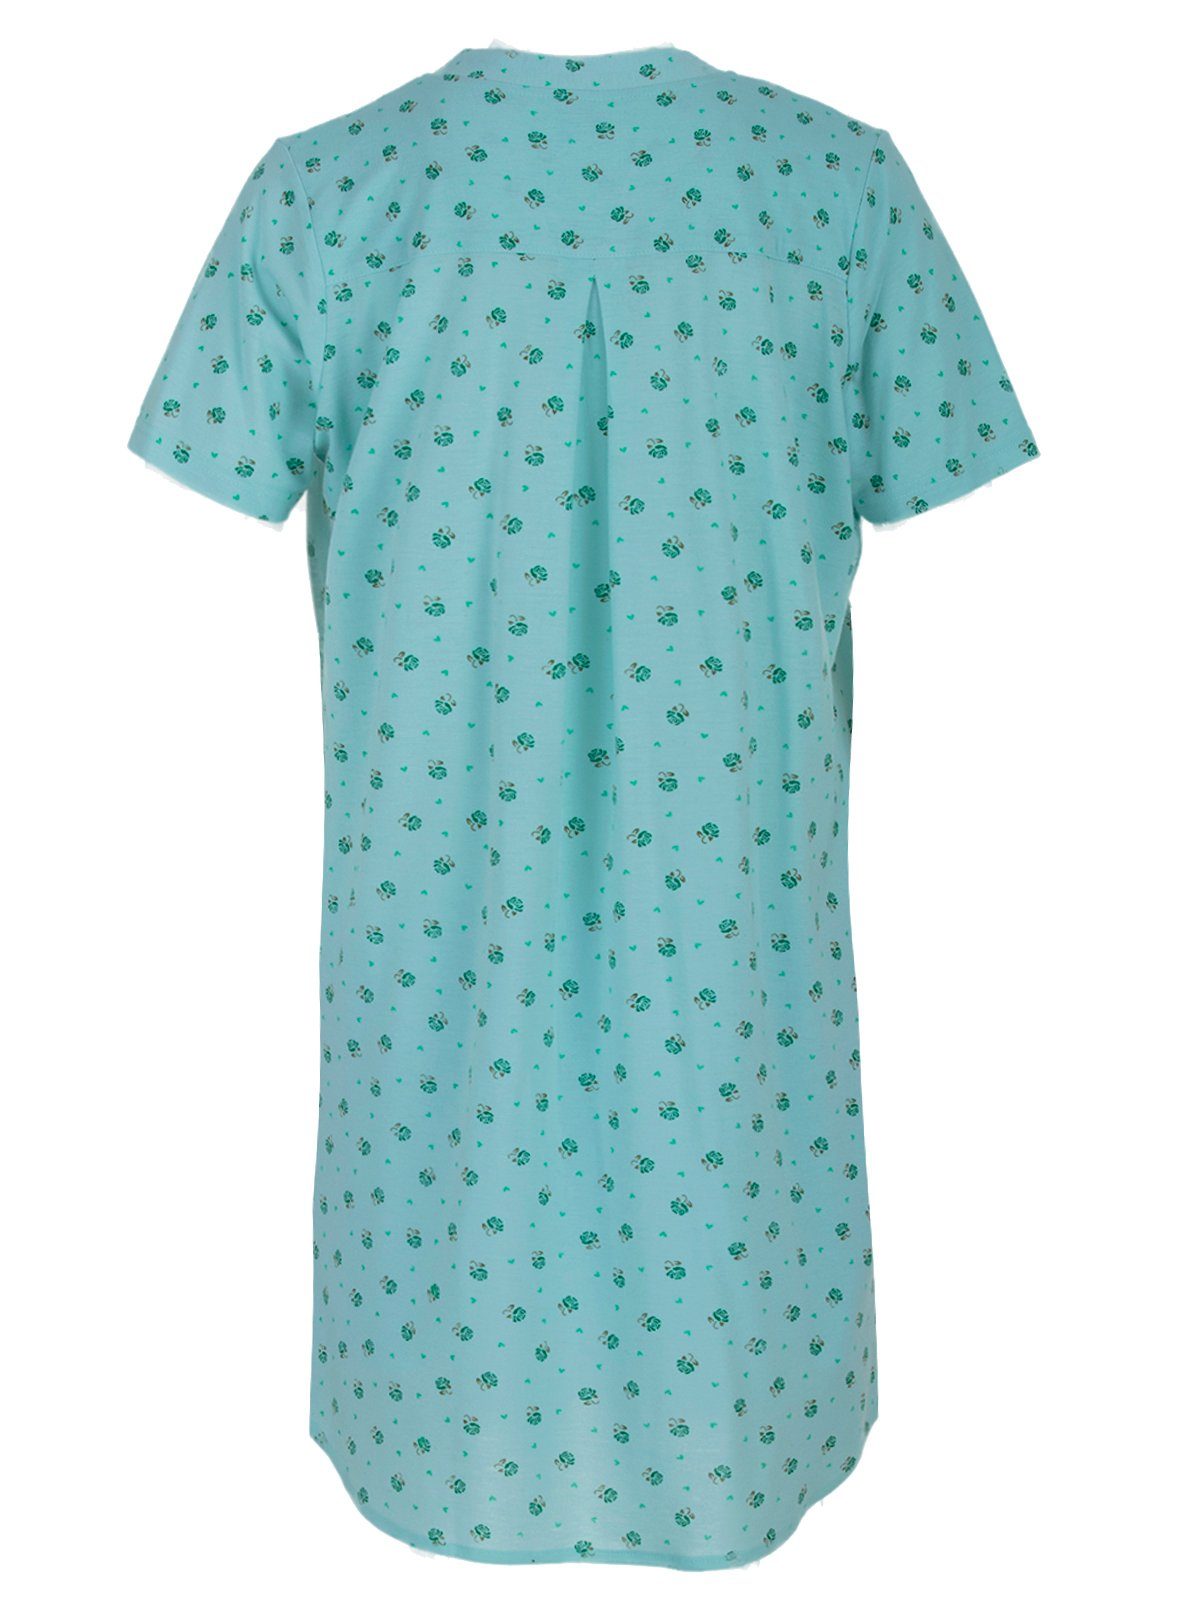 zeitlos Blüten - Nachthemd Kurzarm Knopfleiste Nachthemd mint